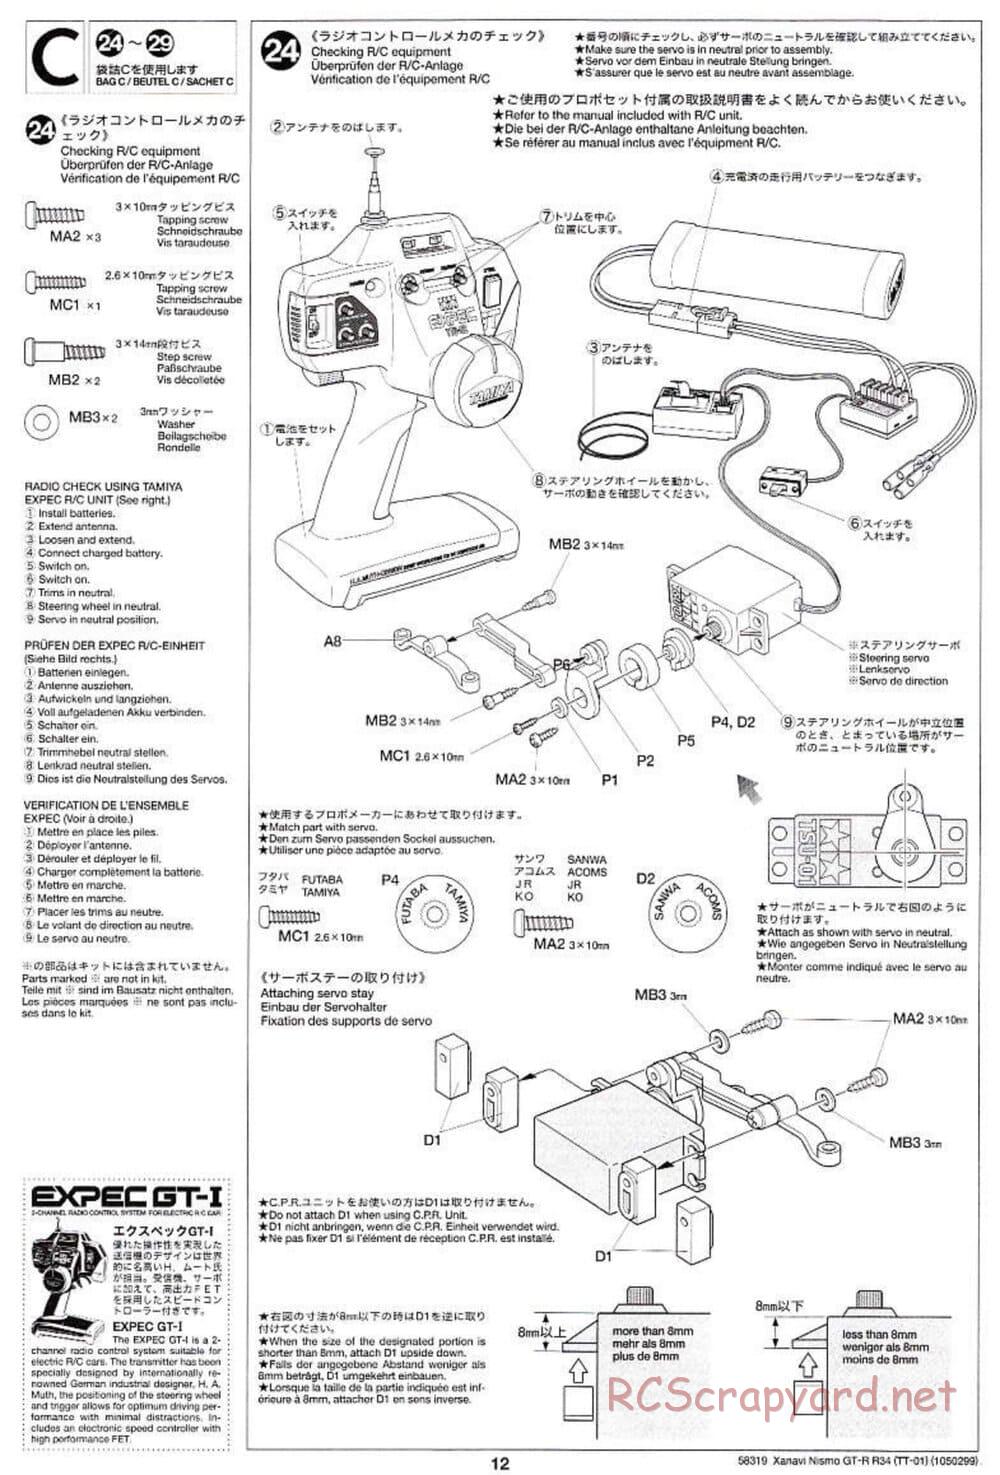 Tamiya - Xanavi Nismo GT-R R34 - TT-01 Chassis - Manual - Page 12